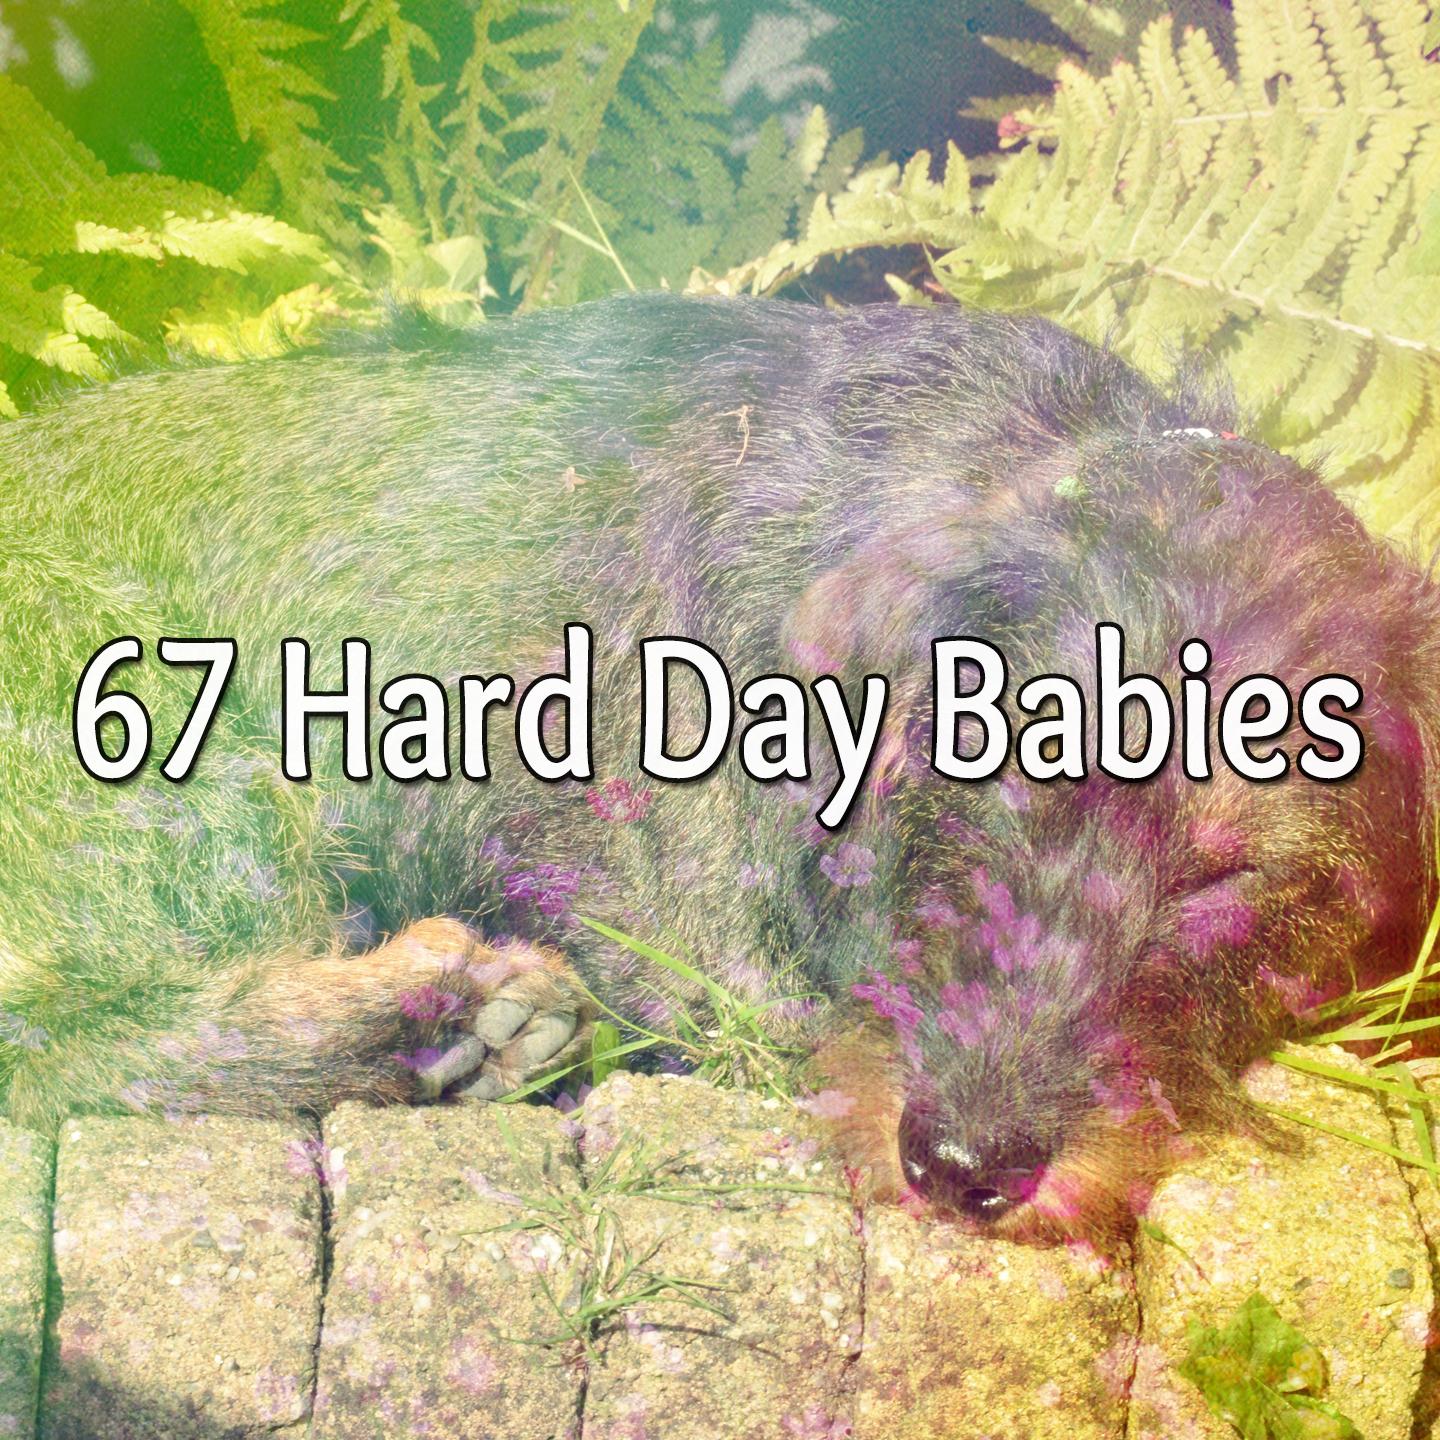 67 Hard Day Babies